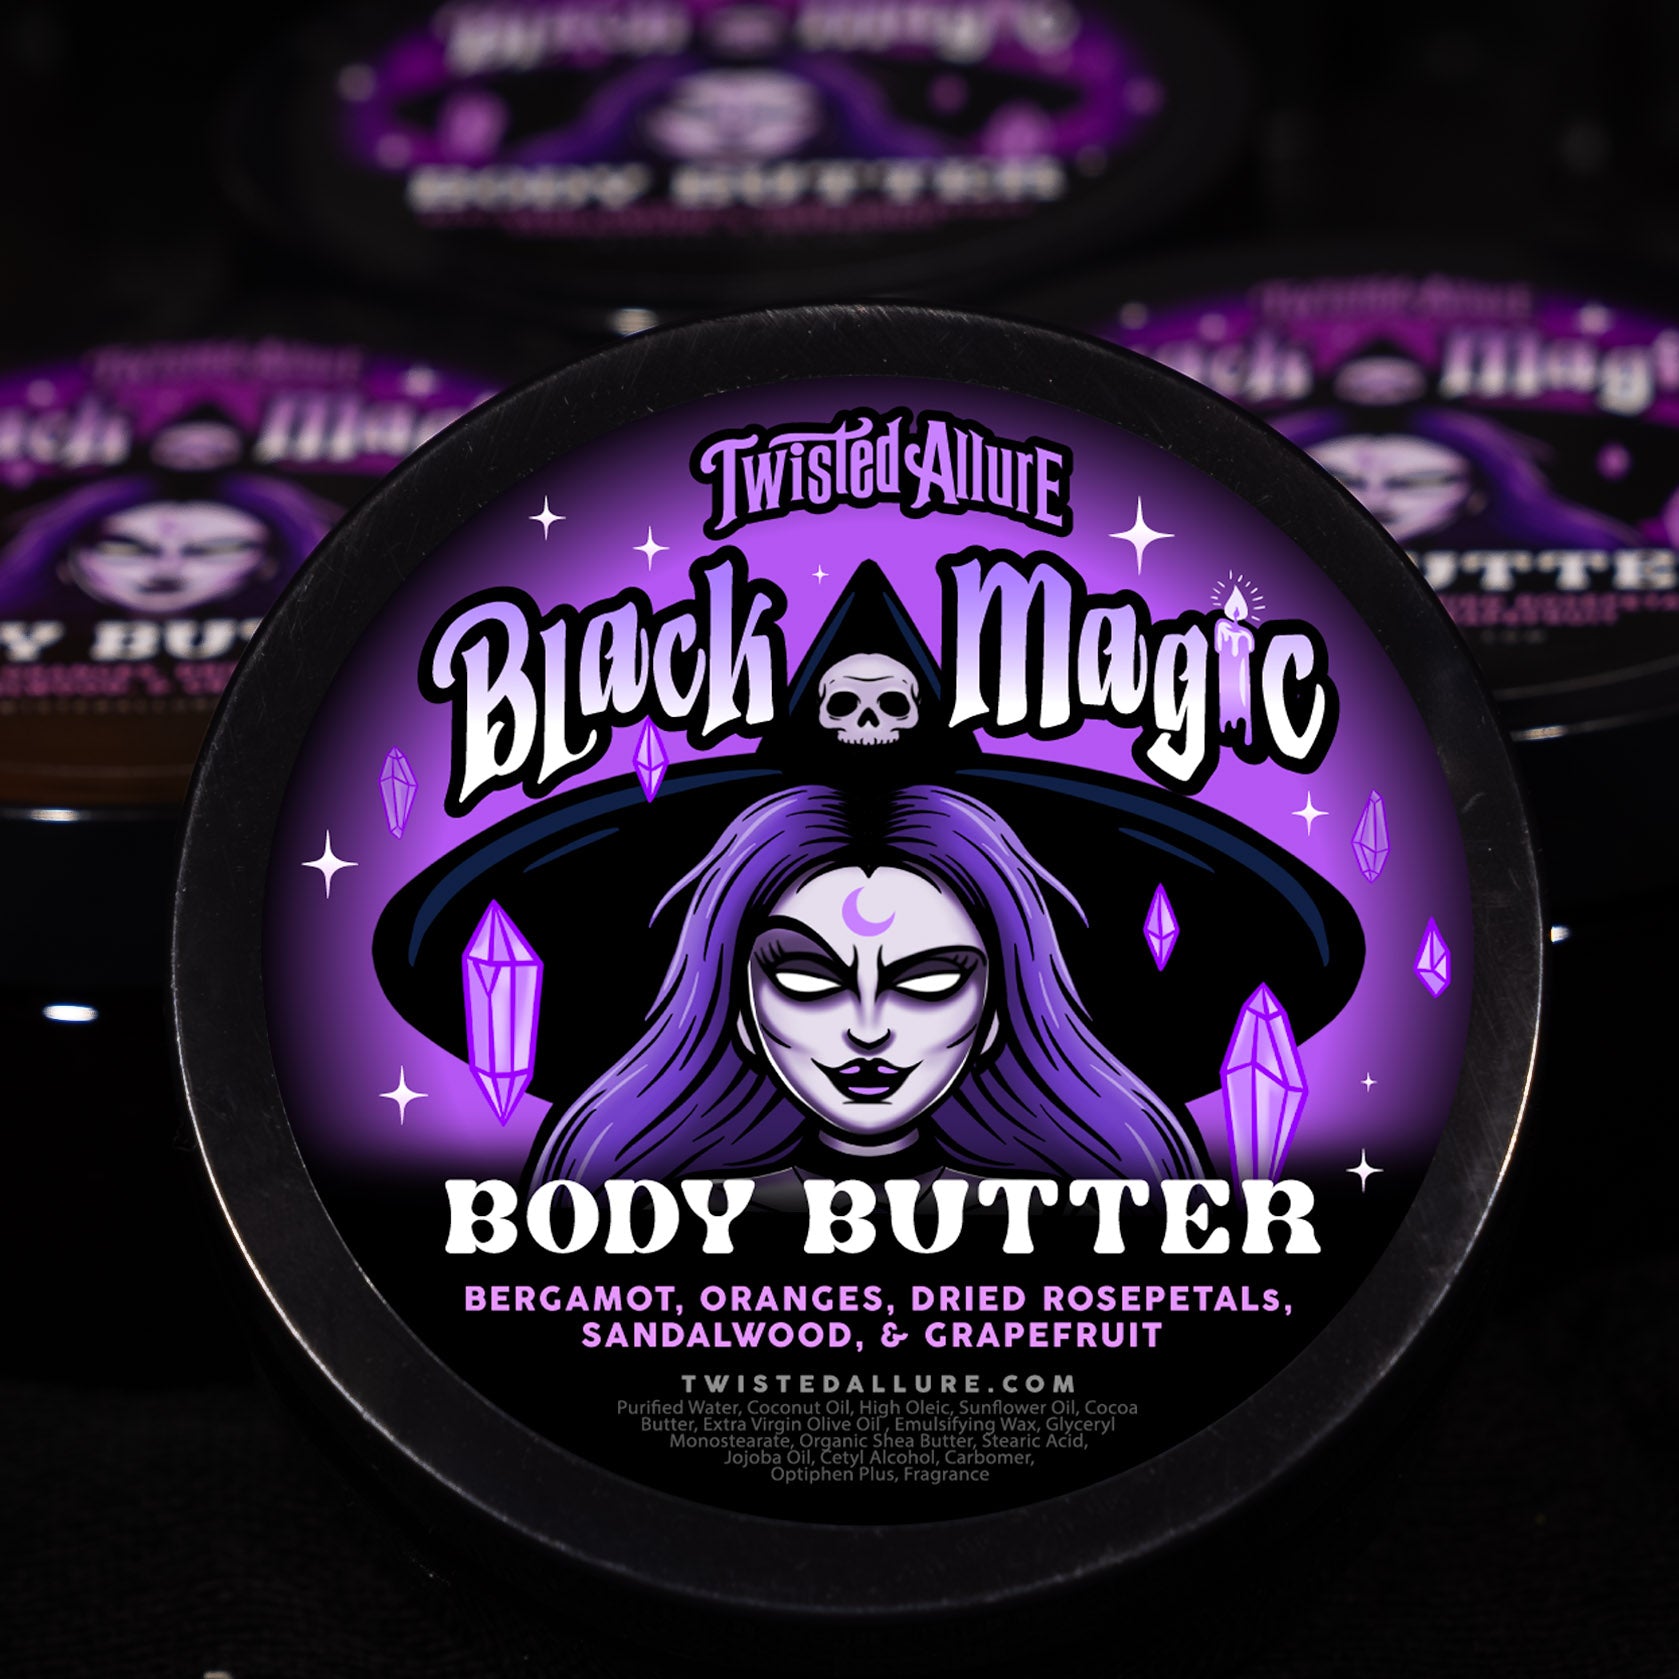 Black Magic Body Butter